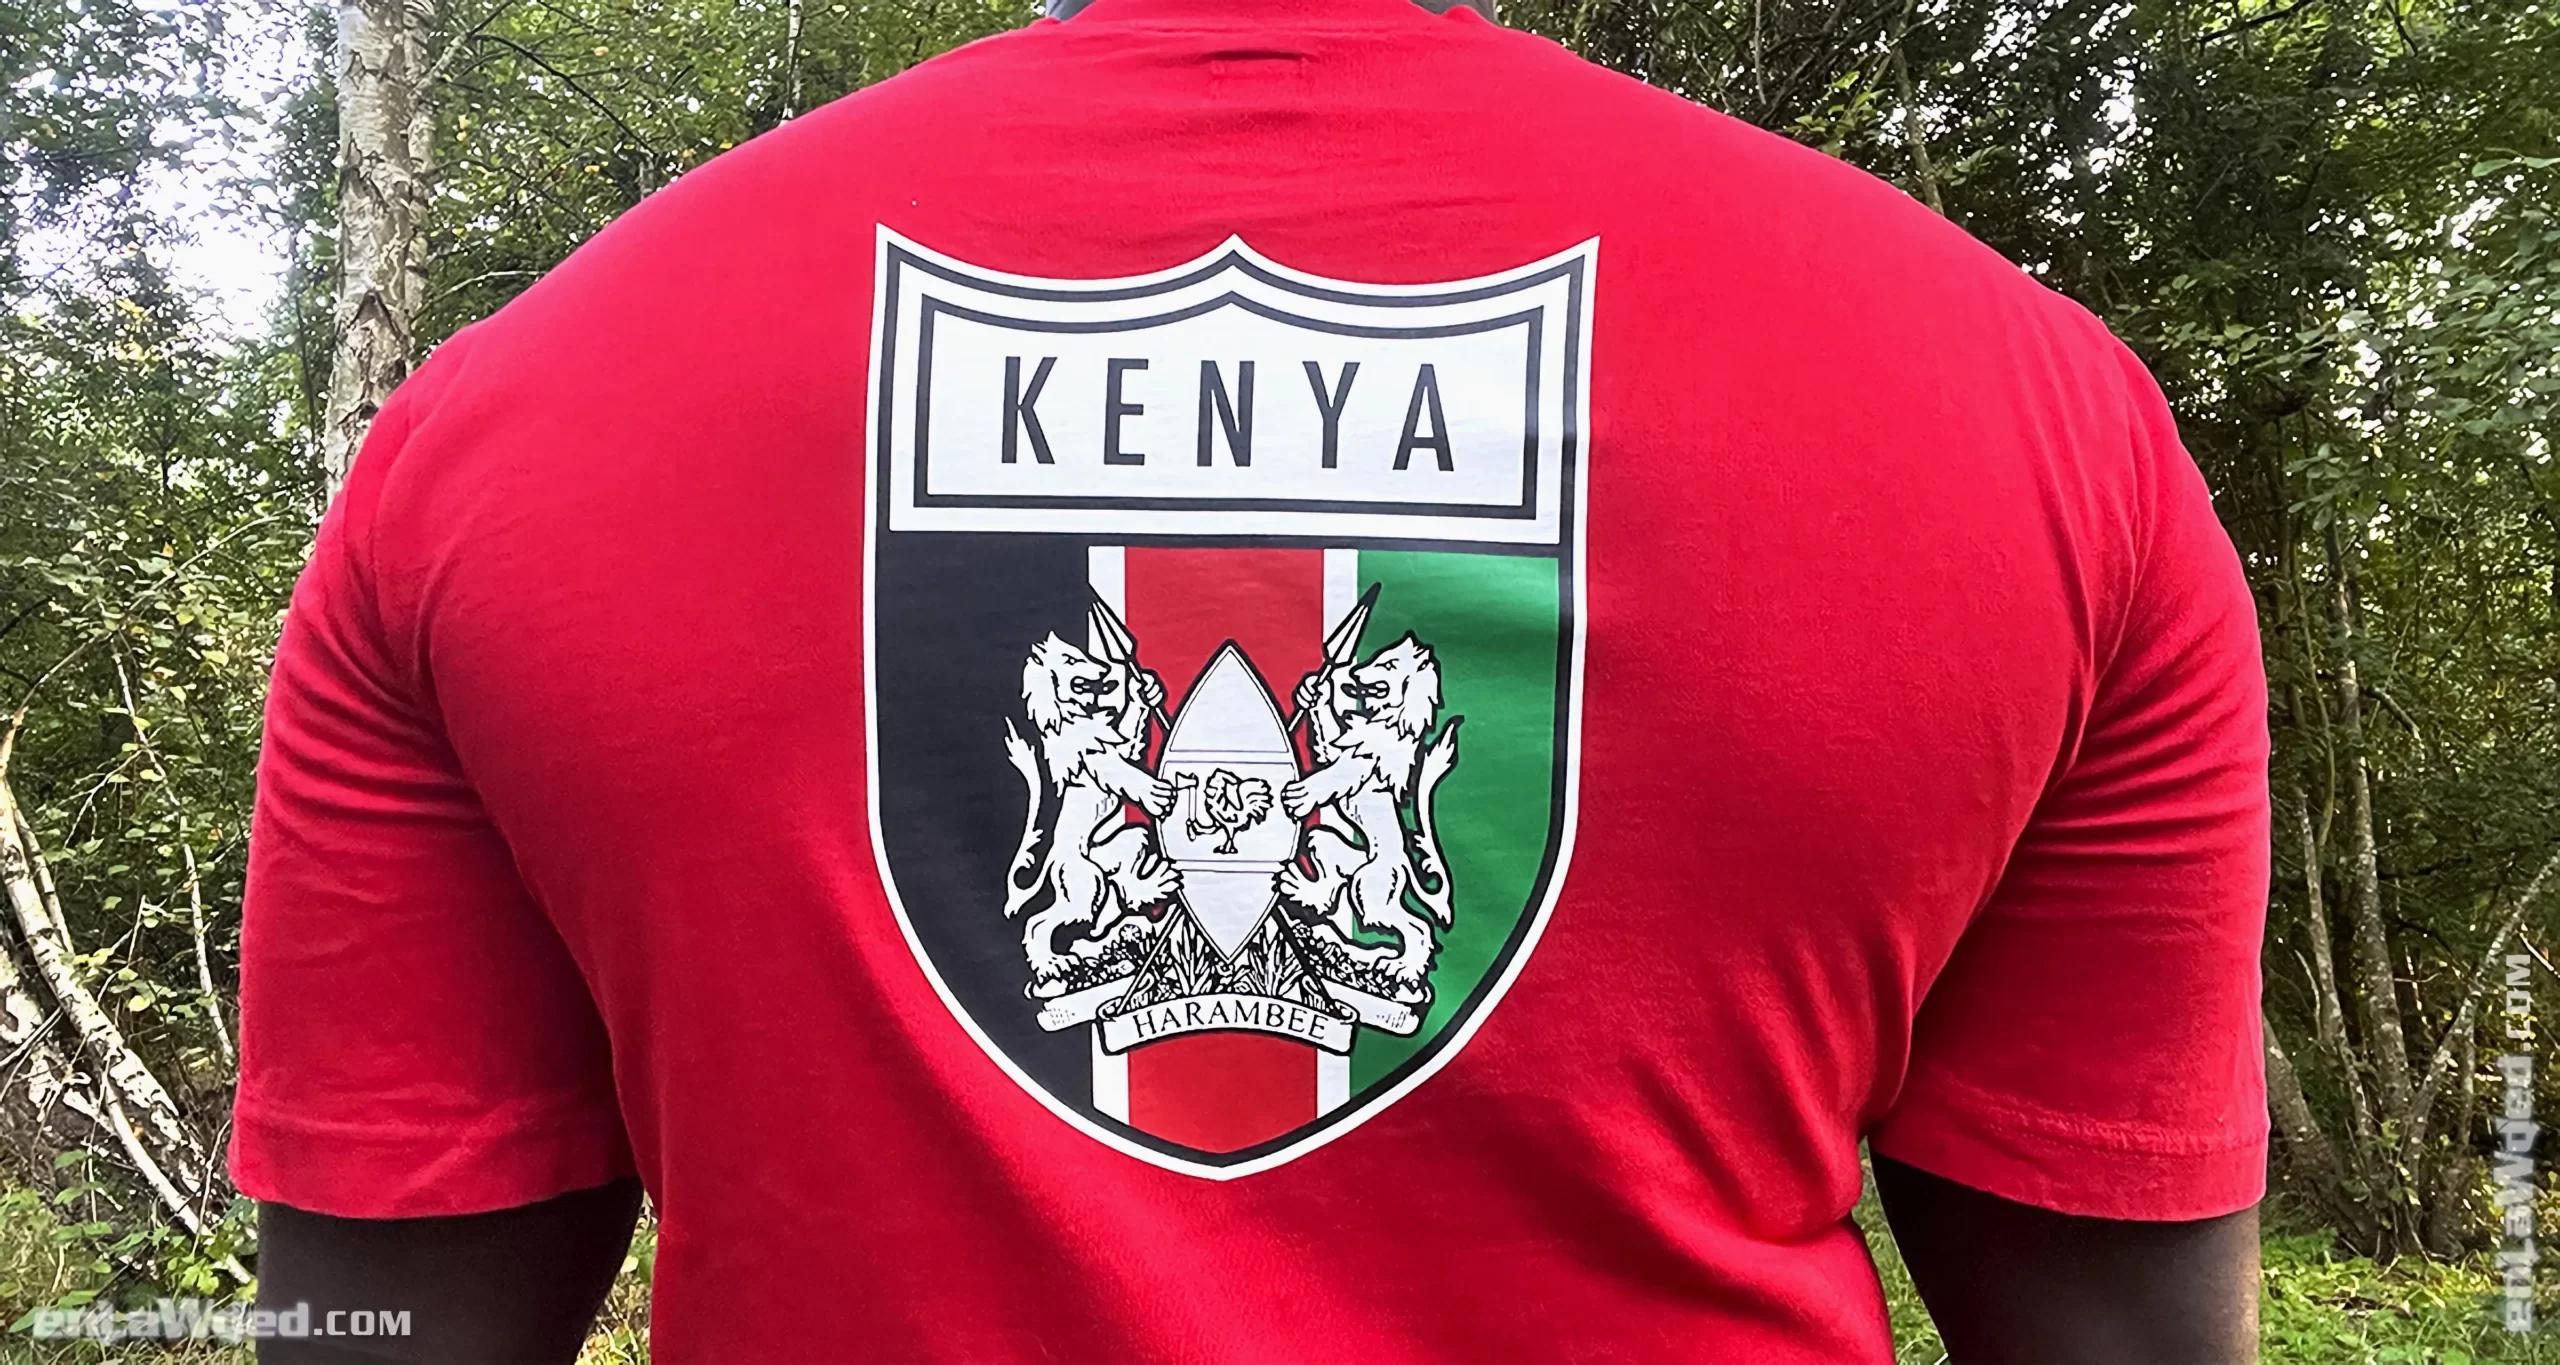 Men’s 2007 Kenya Harambee T-Shirt by Adidas Originals: Overnight (EnLawded.com file #lp1nbgxp126185do4jydnb6a)